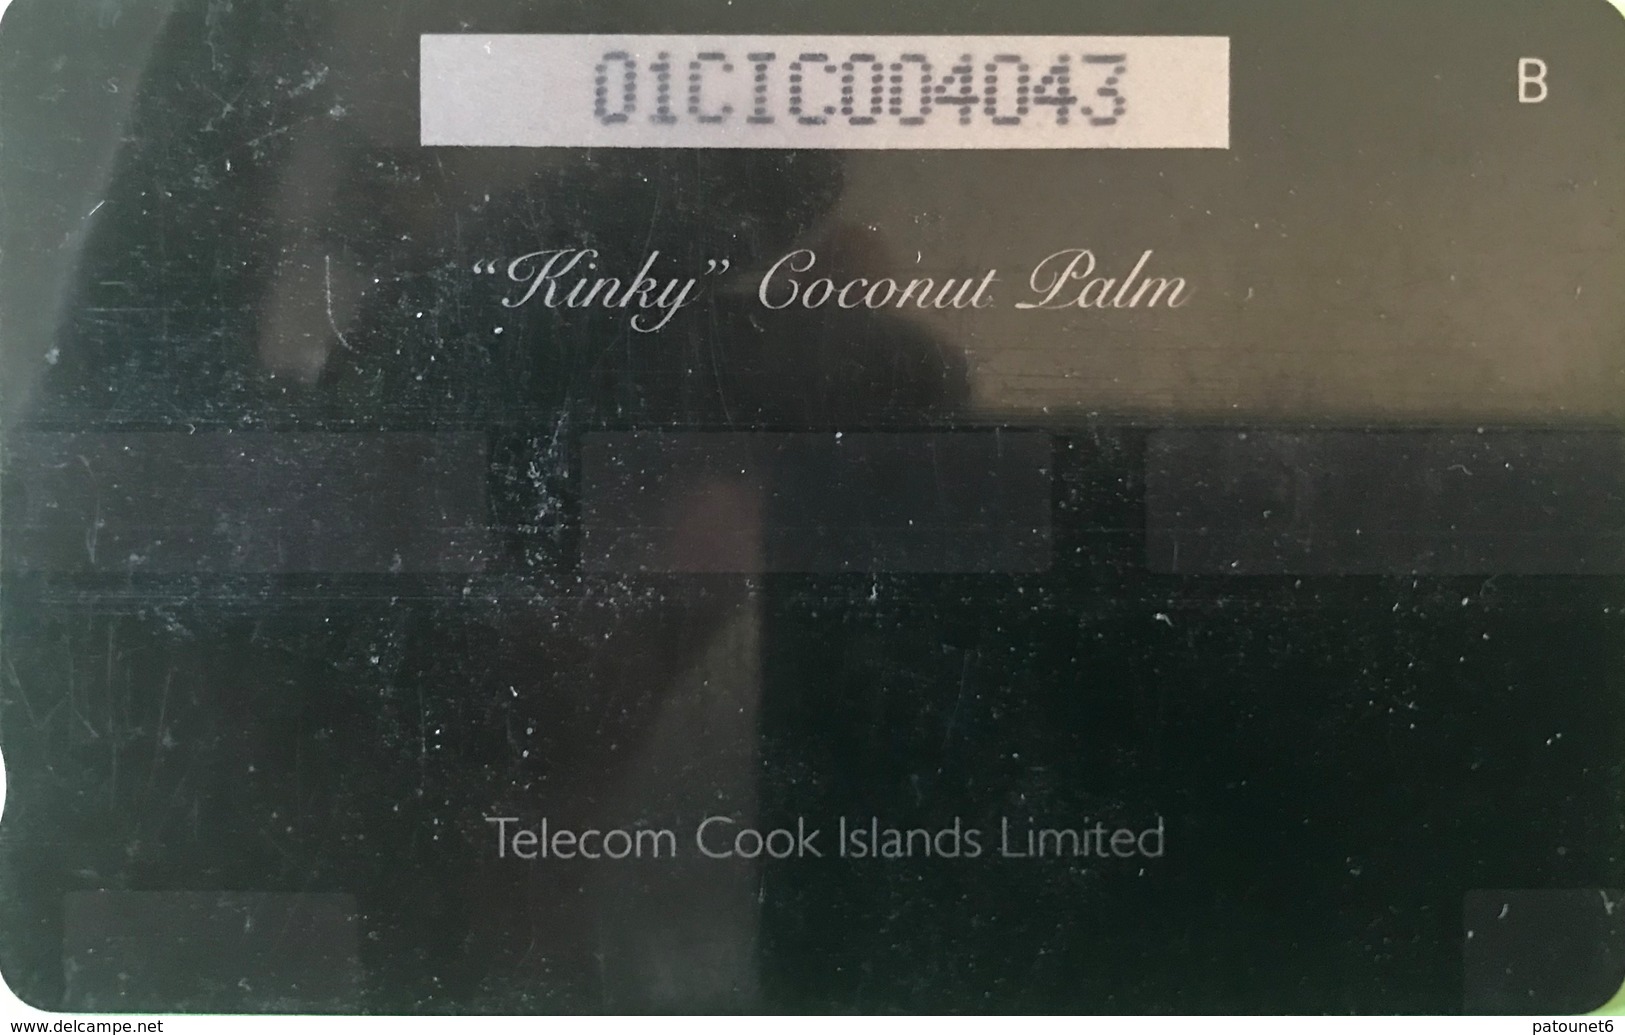 ILES COOK  -  Phonecard  -  " Ei Katu "   Kinky Coconut Palm  -  $10  -  TCI - Cook Islands